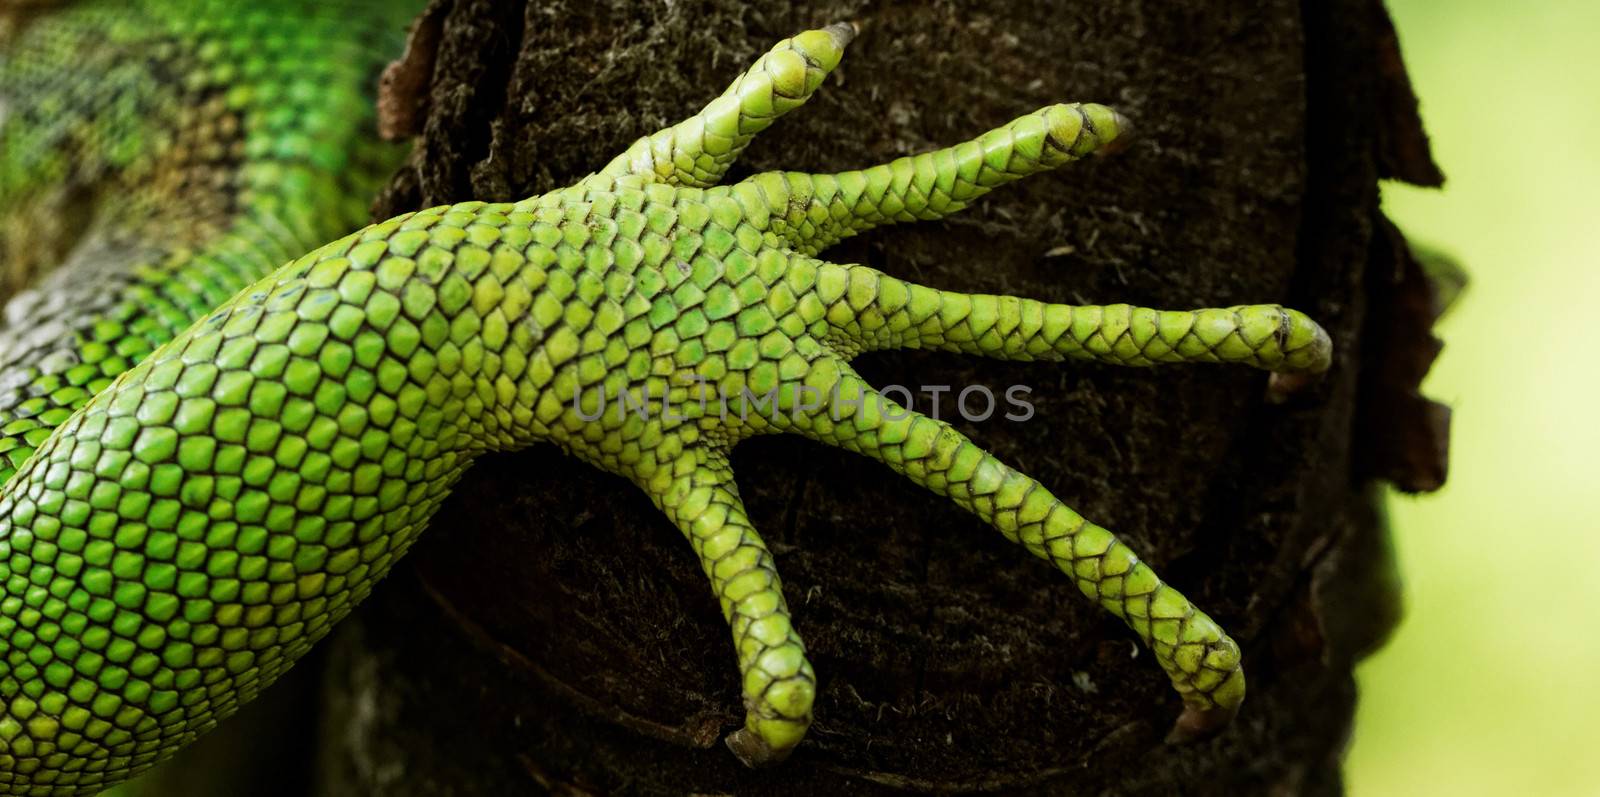 green iguana feet by NagyDodo